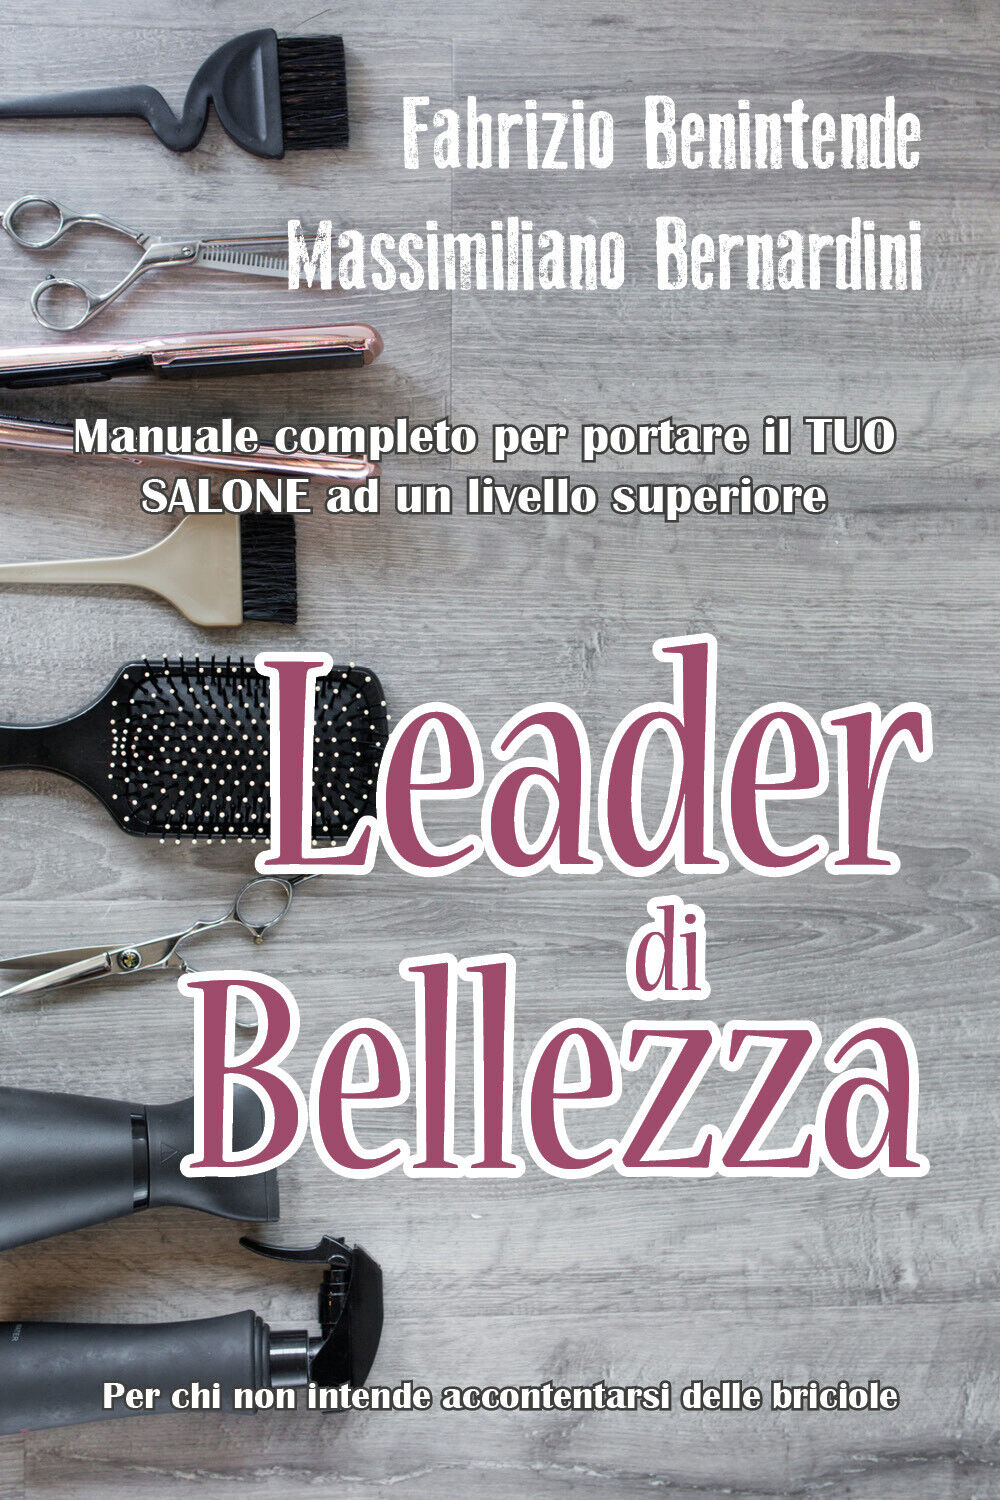 Leader di Bellezza di Fabrizio Benintende Mass. . . Bernardini,  2019,  Youcanpr